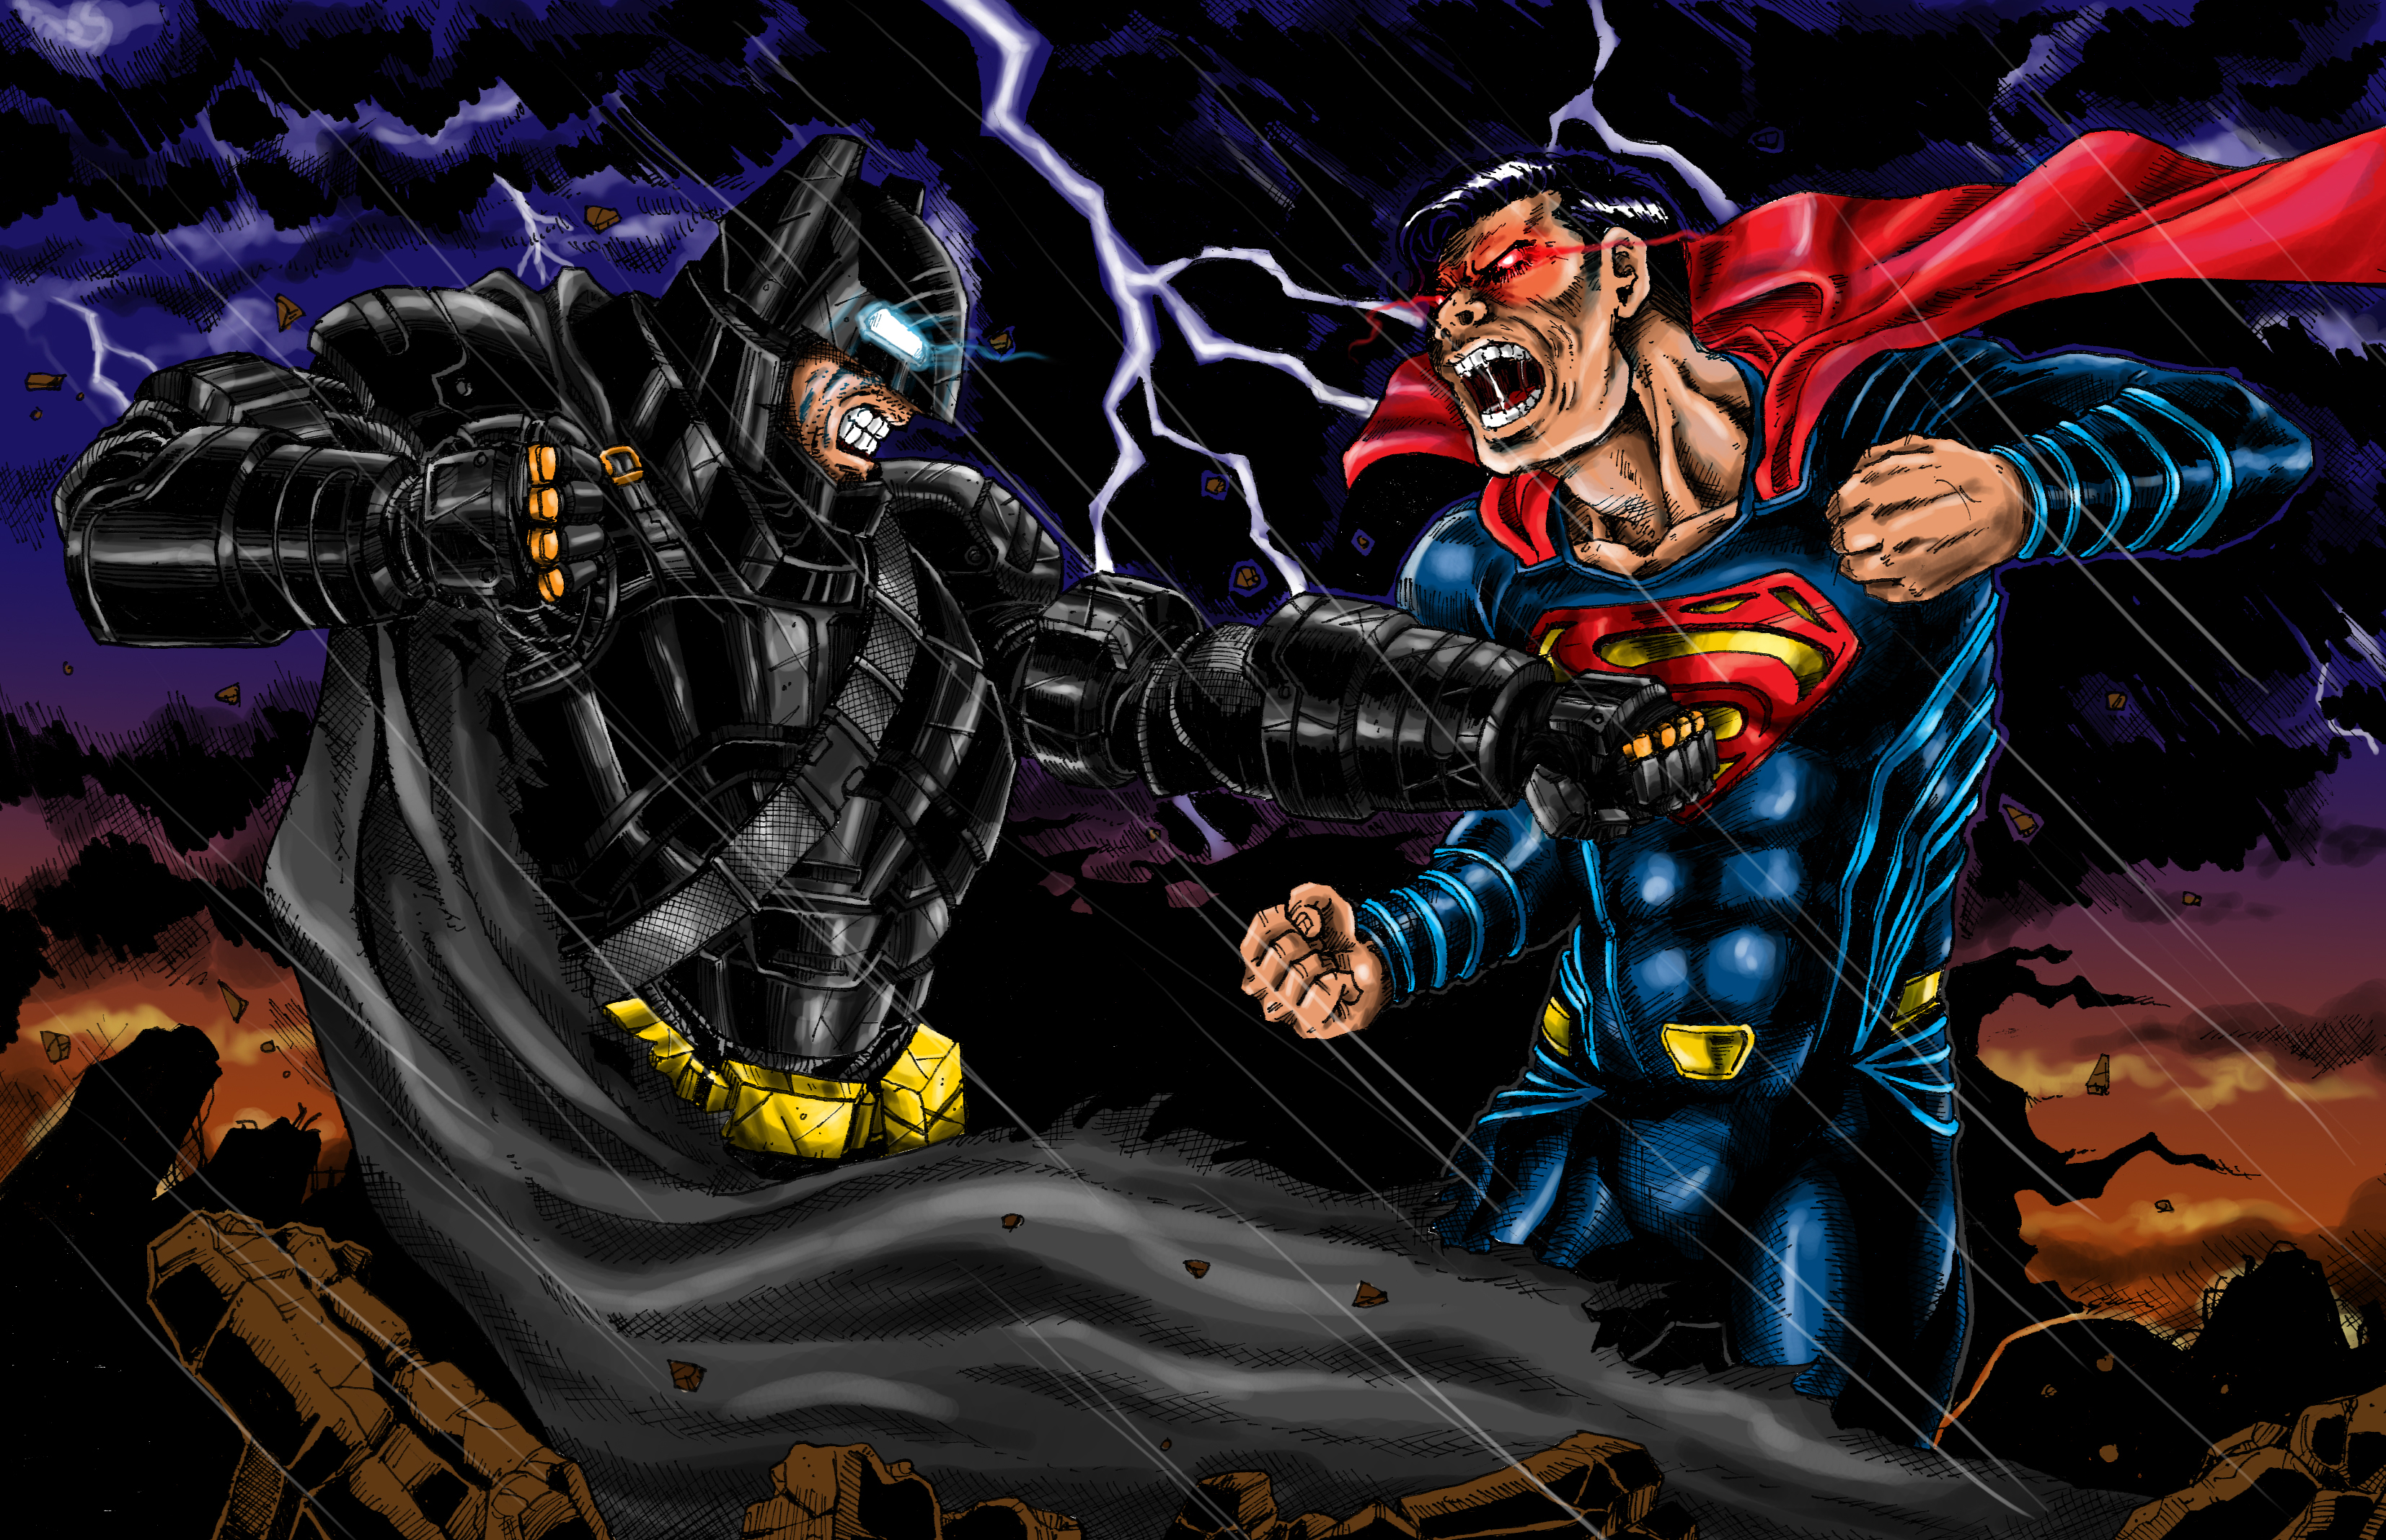 Batman V Superman Fan Art Illustration, HD Superheroes, 4k Wallpapers,  Images, Backgrounds, Photos and Pictures